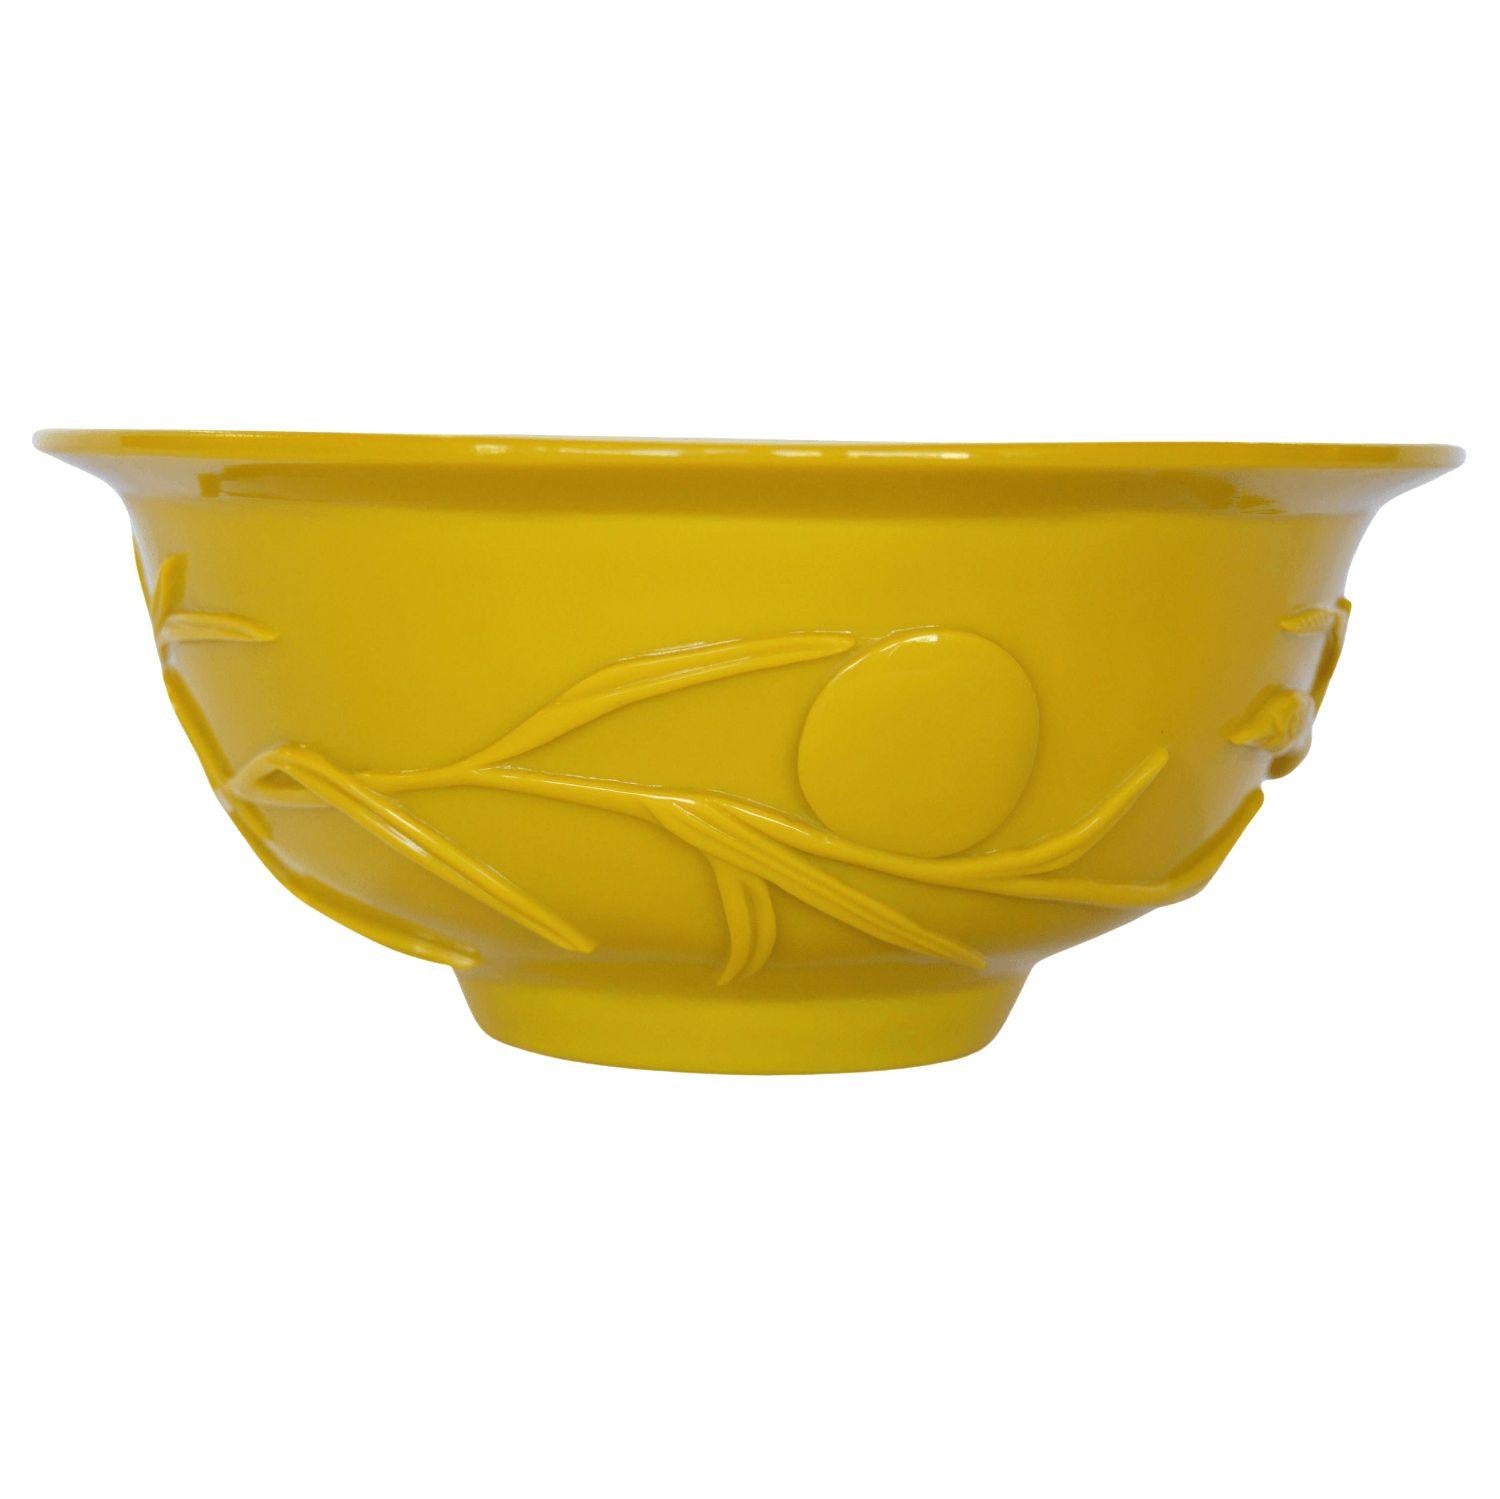 Colorful Late 19th Century Chinese Yellow Pekin Glass Bowl.